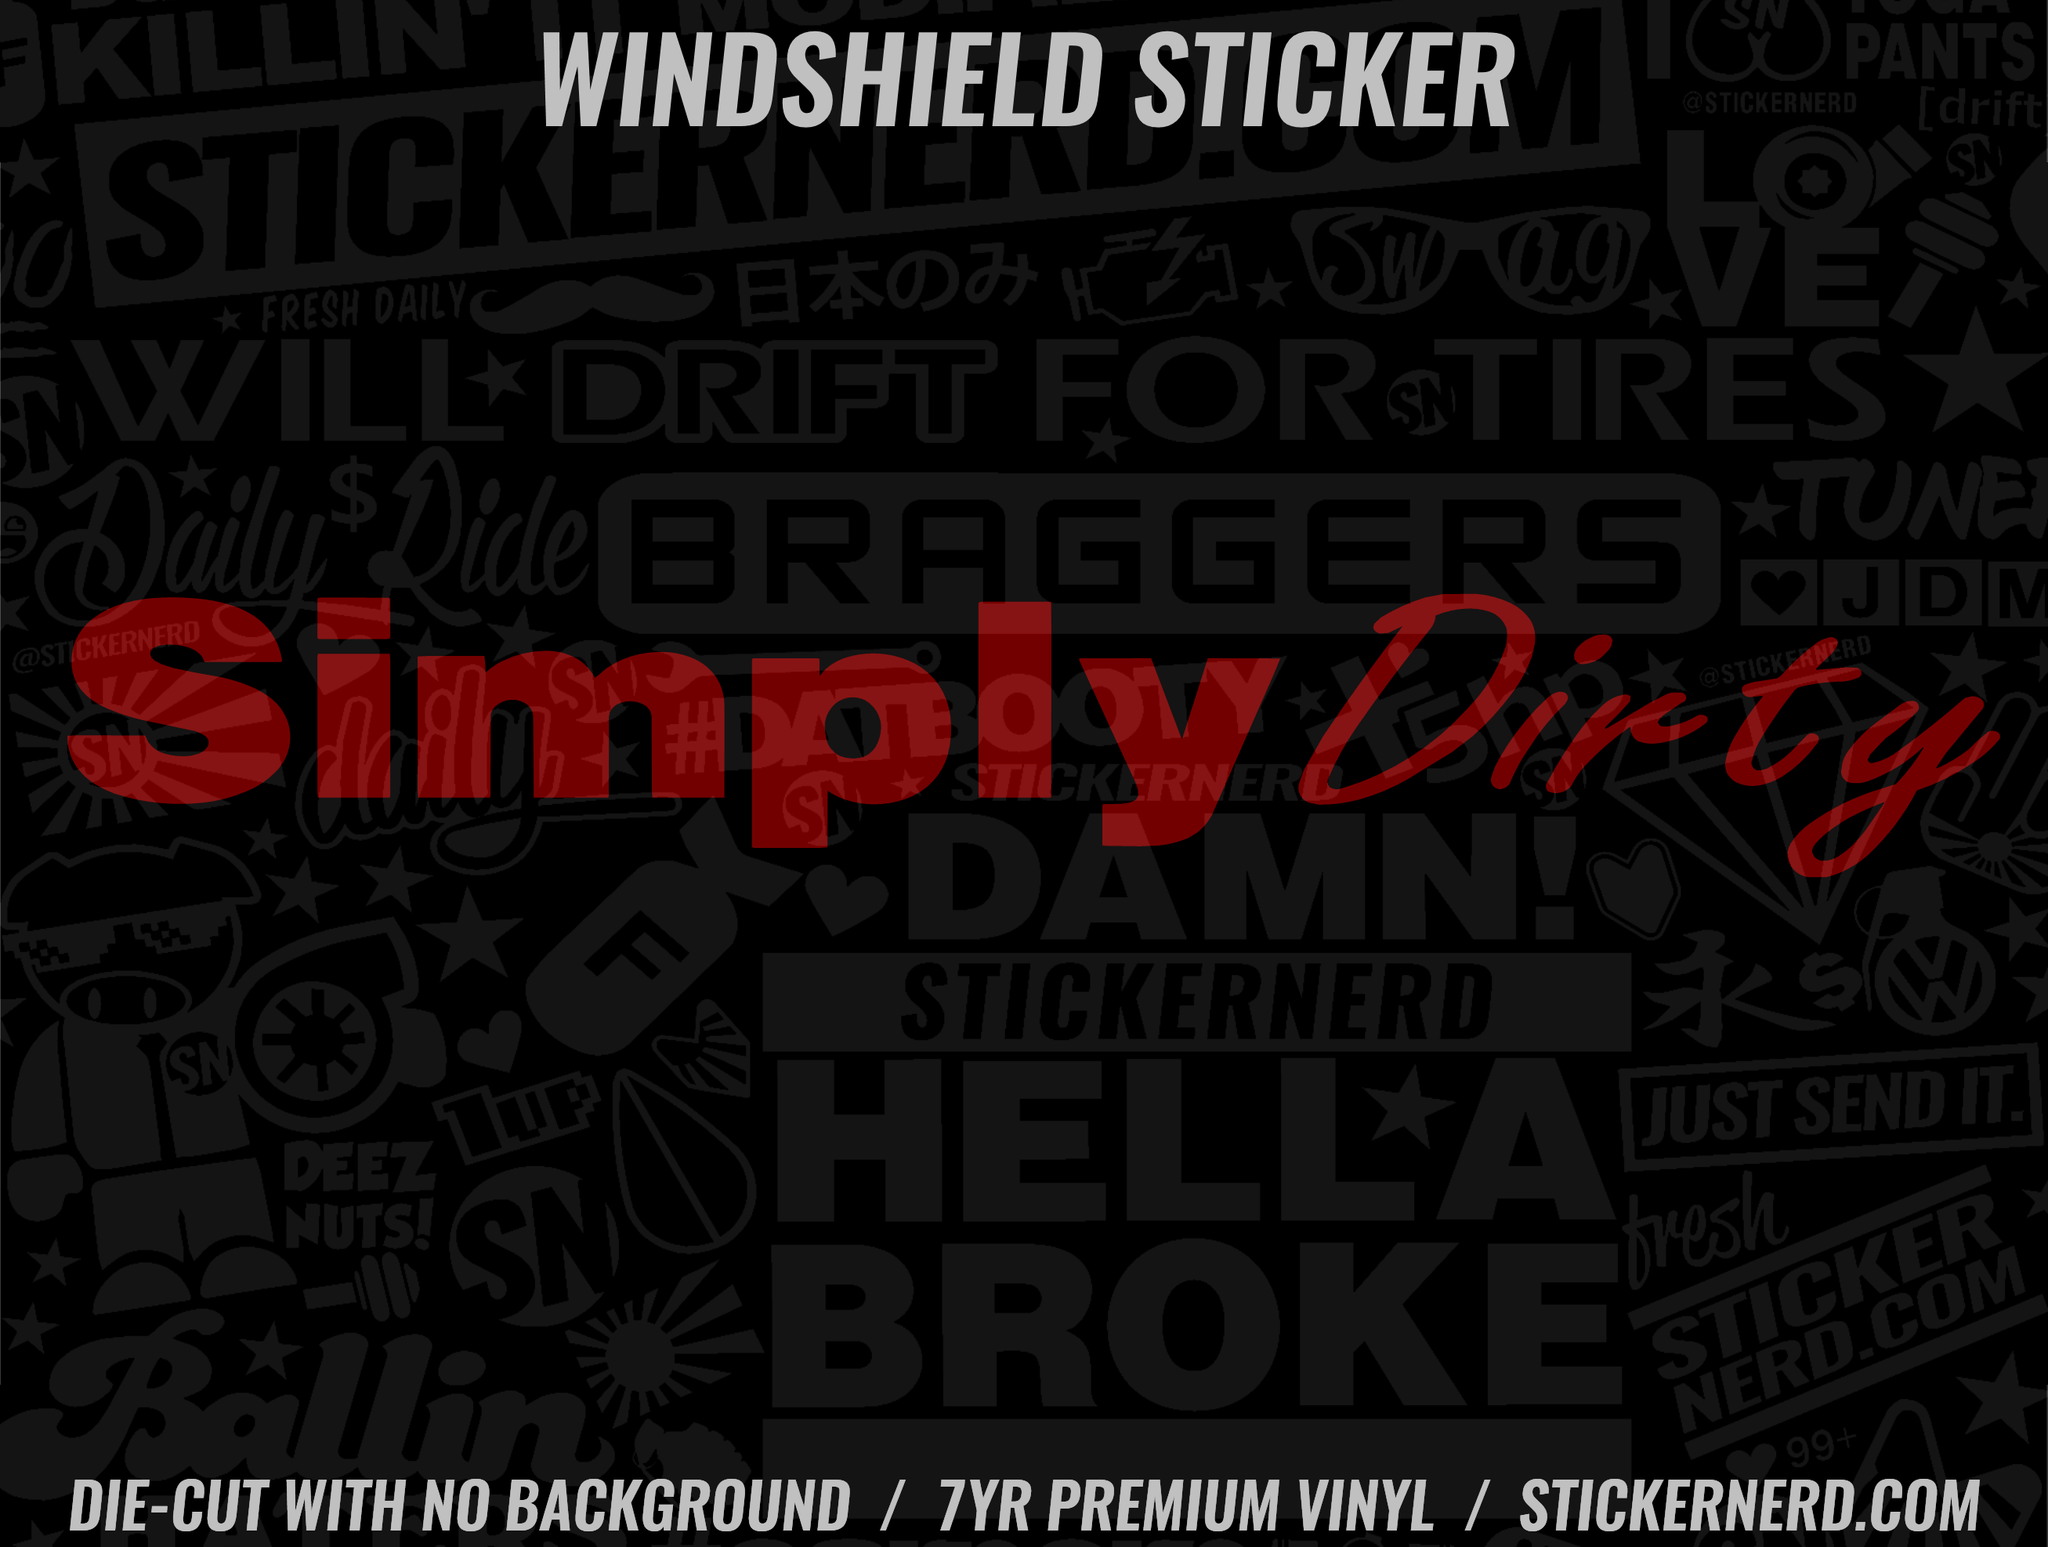 Simply Dirty Windshield Sticker - Window Decal - STICKERNERD.COM